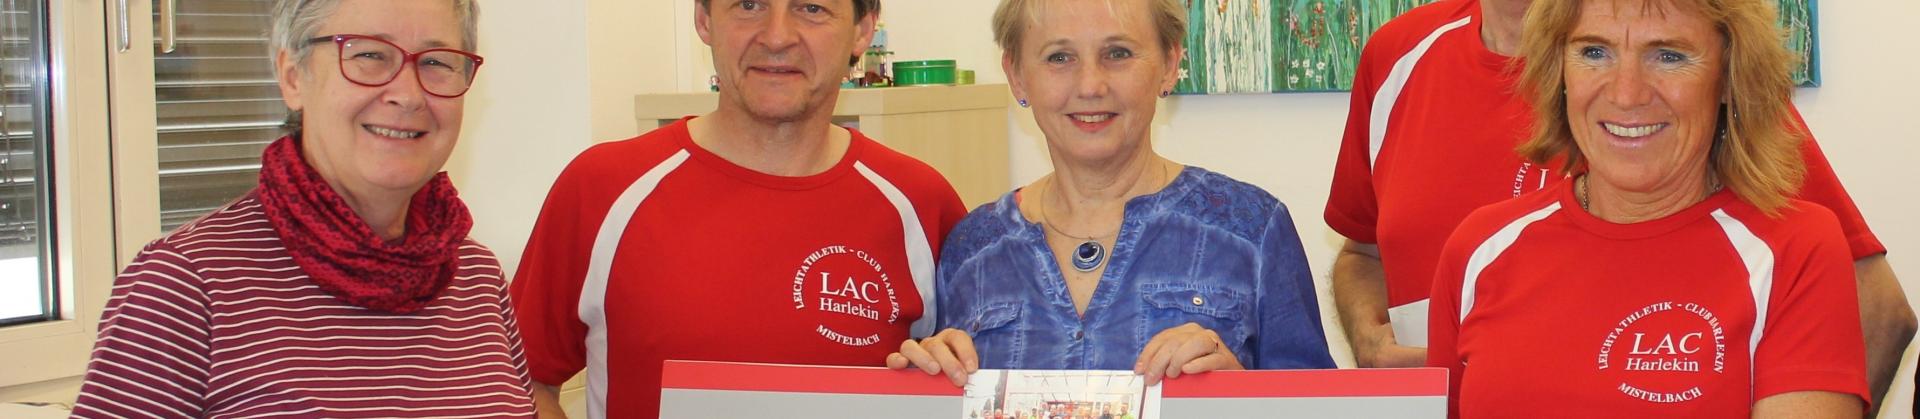 Charity Lauf des LAC Harlekin mit DSA Roswitha Tscherkassky-Koularas